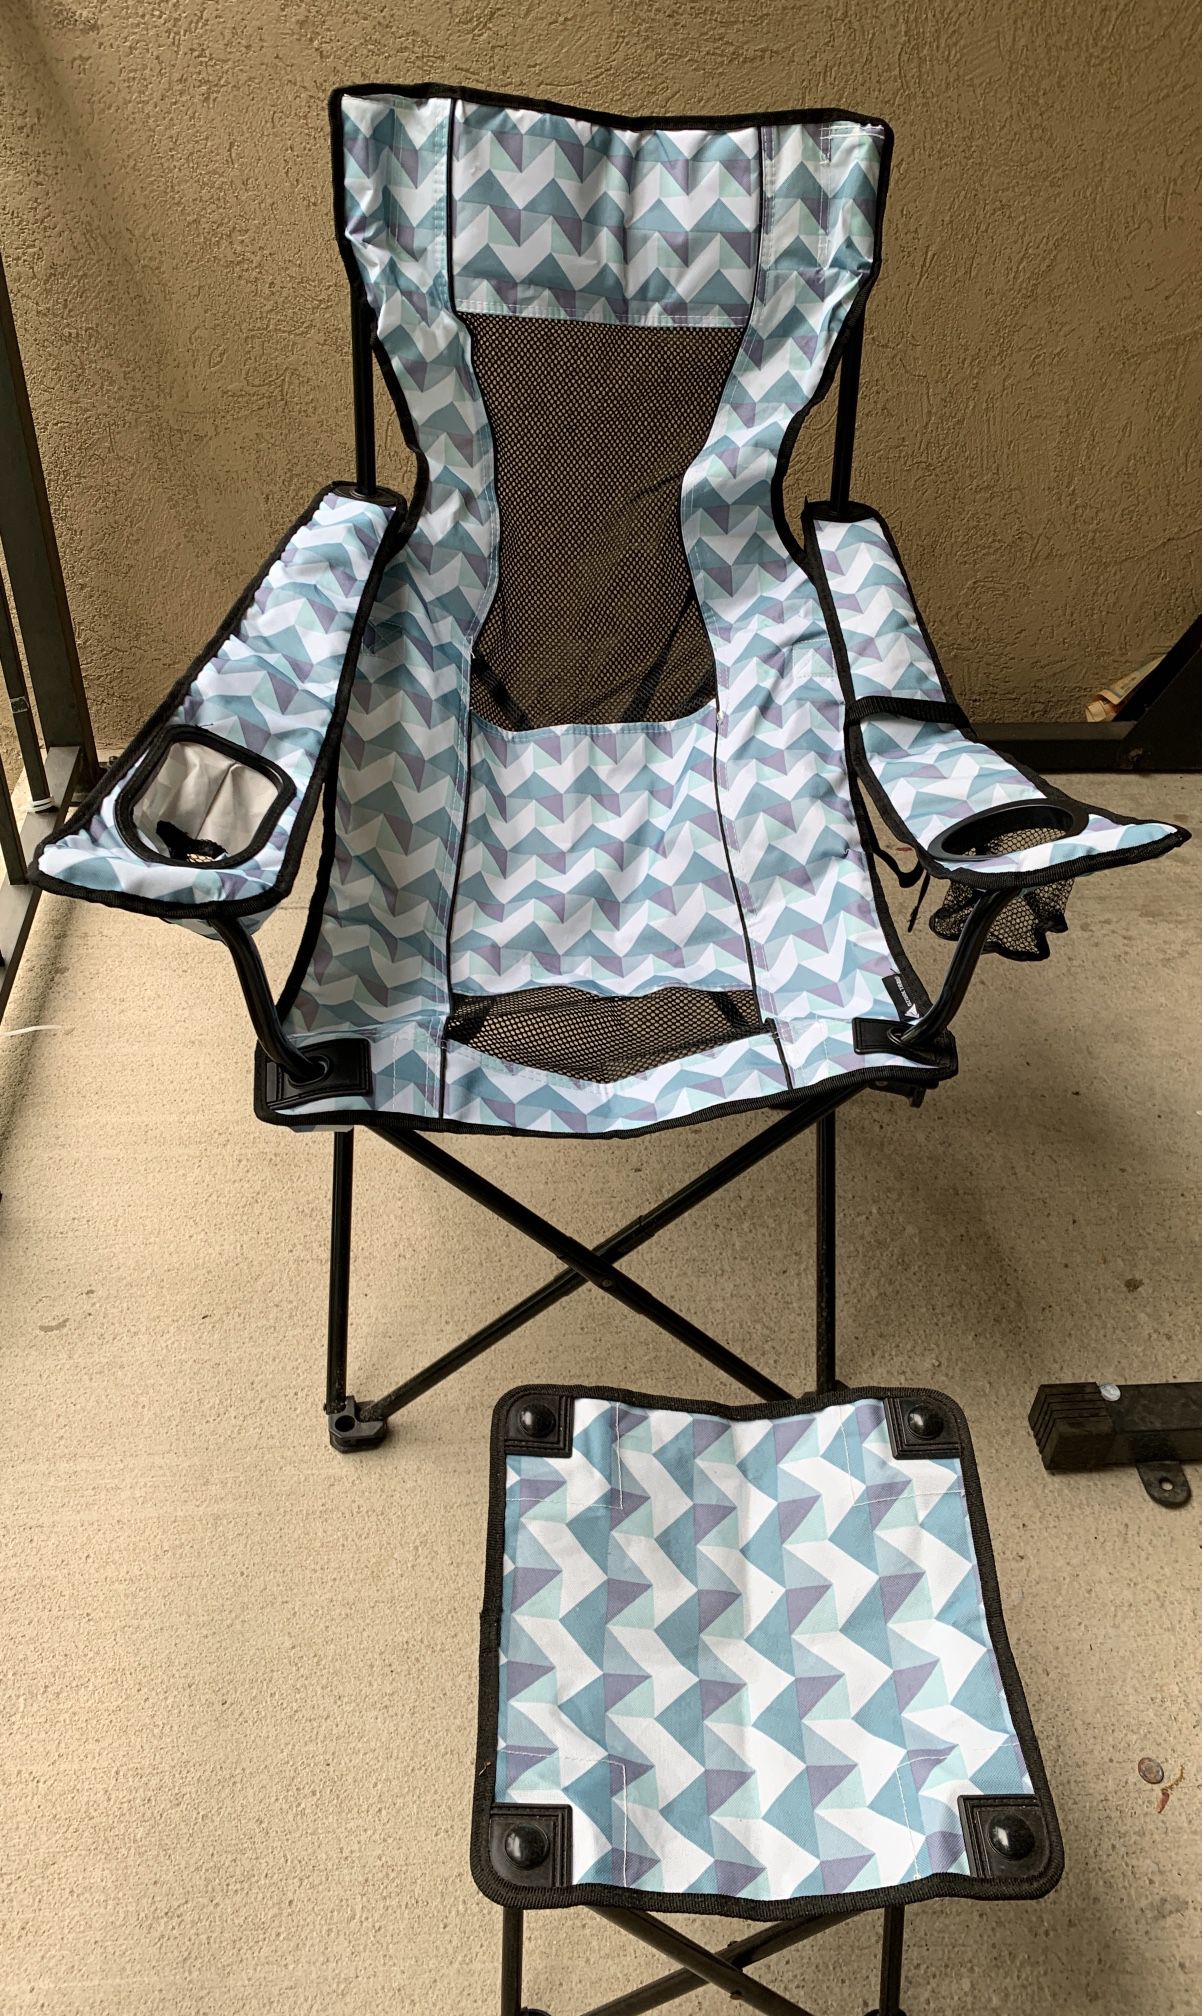 set of beach umbrella, beach chairs, skewers